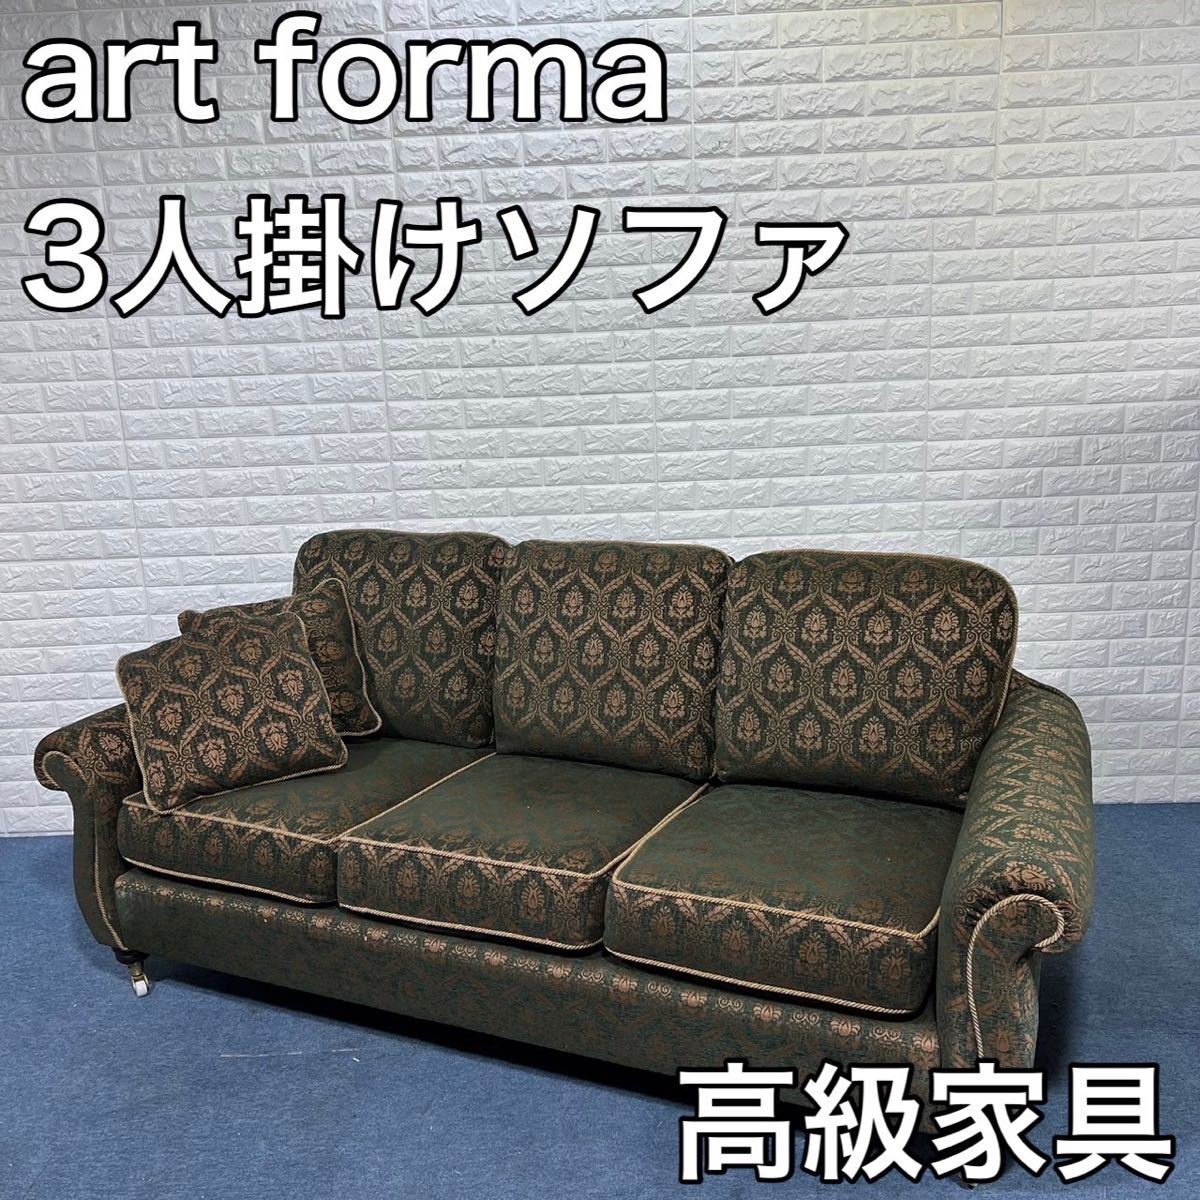 art forma アートフォーマ 3人掛け ソファ イギリス 英国 高級家具 総柄 インテリア 家具